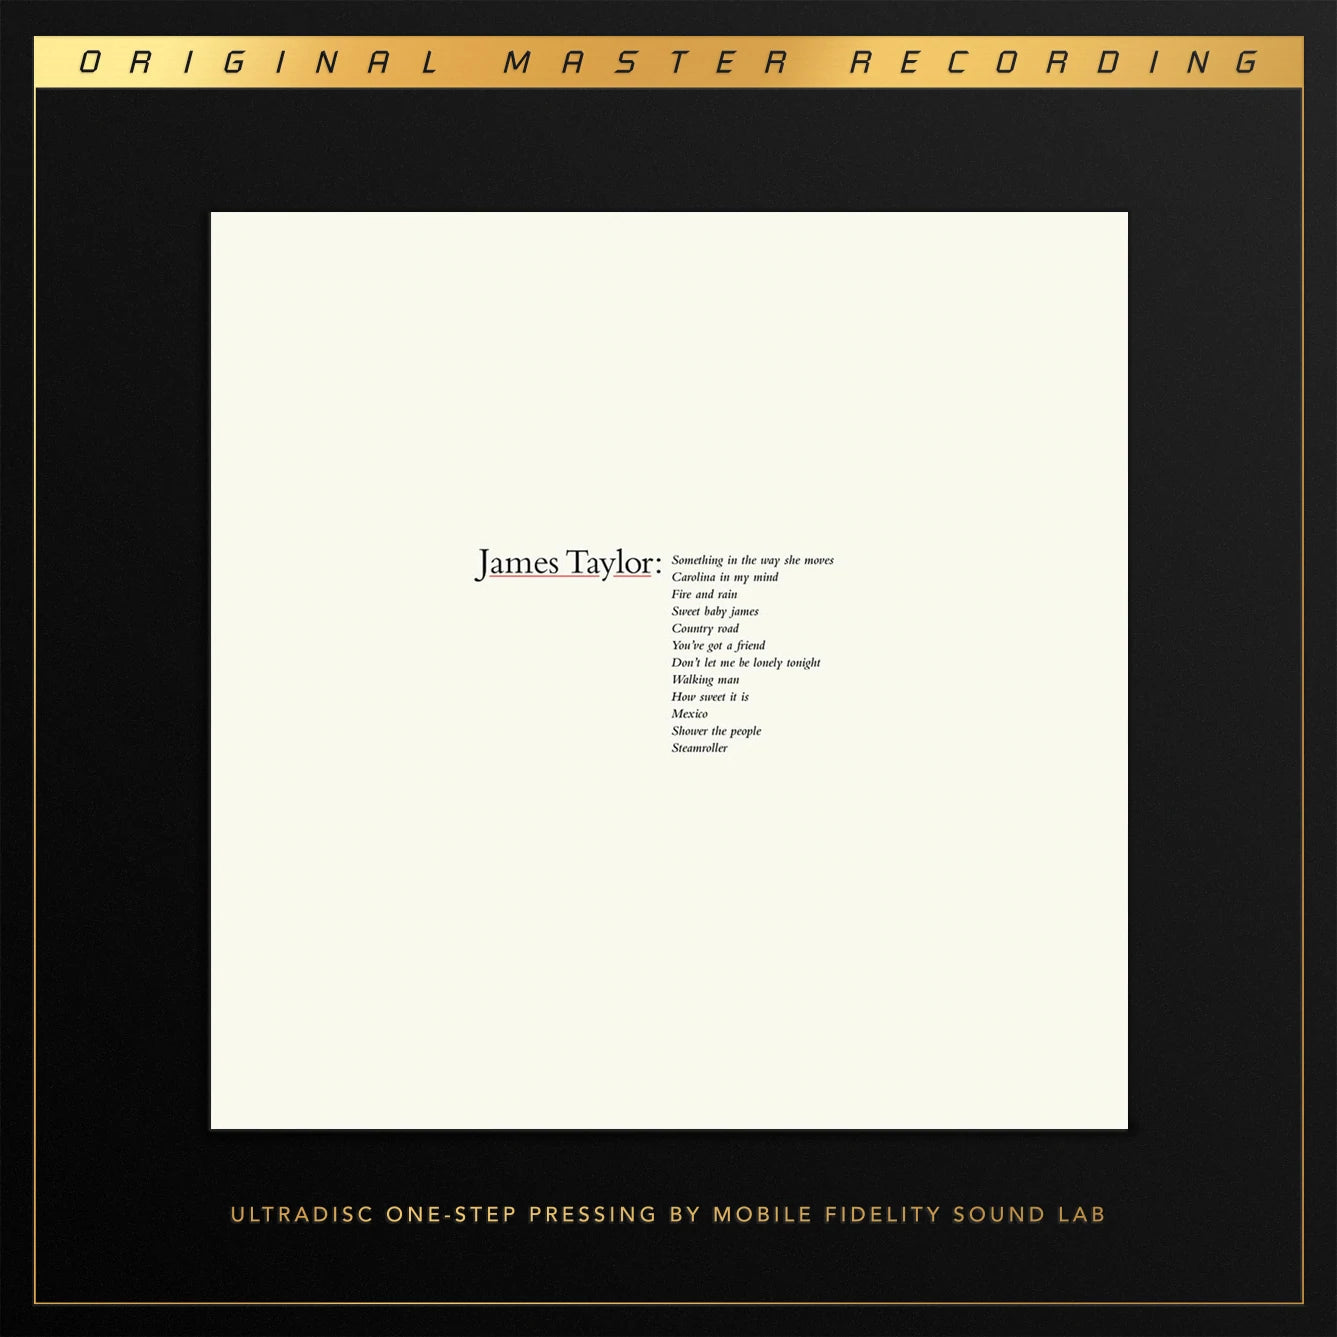 James Taylor - "Greatest Hits" MoFi One-Step